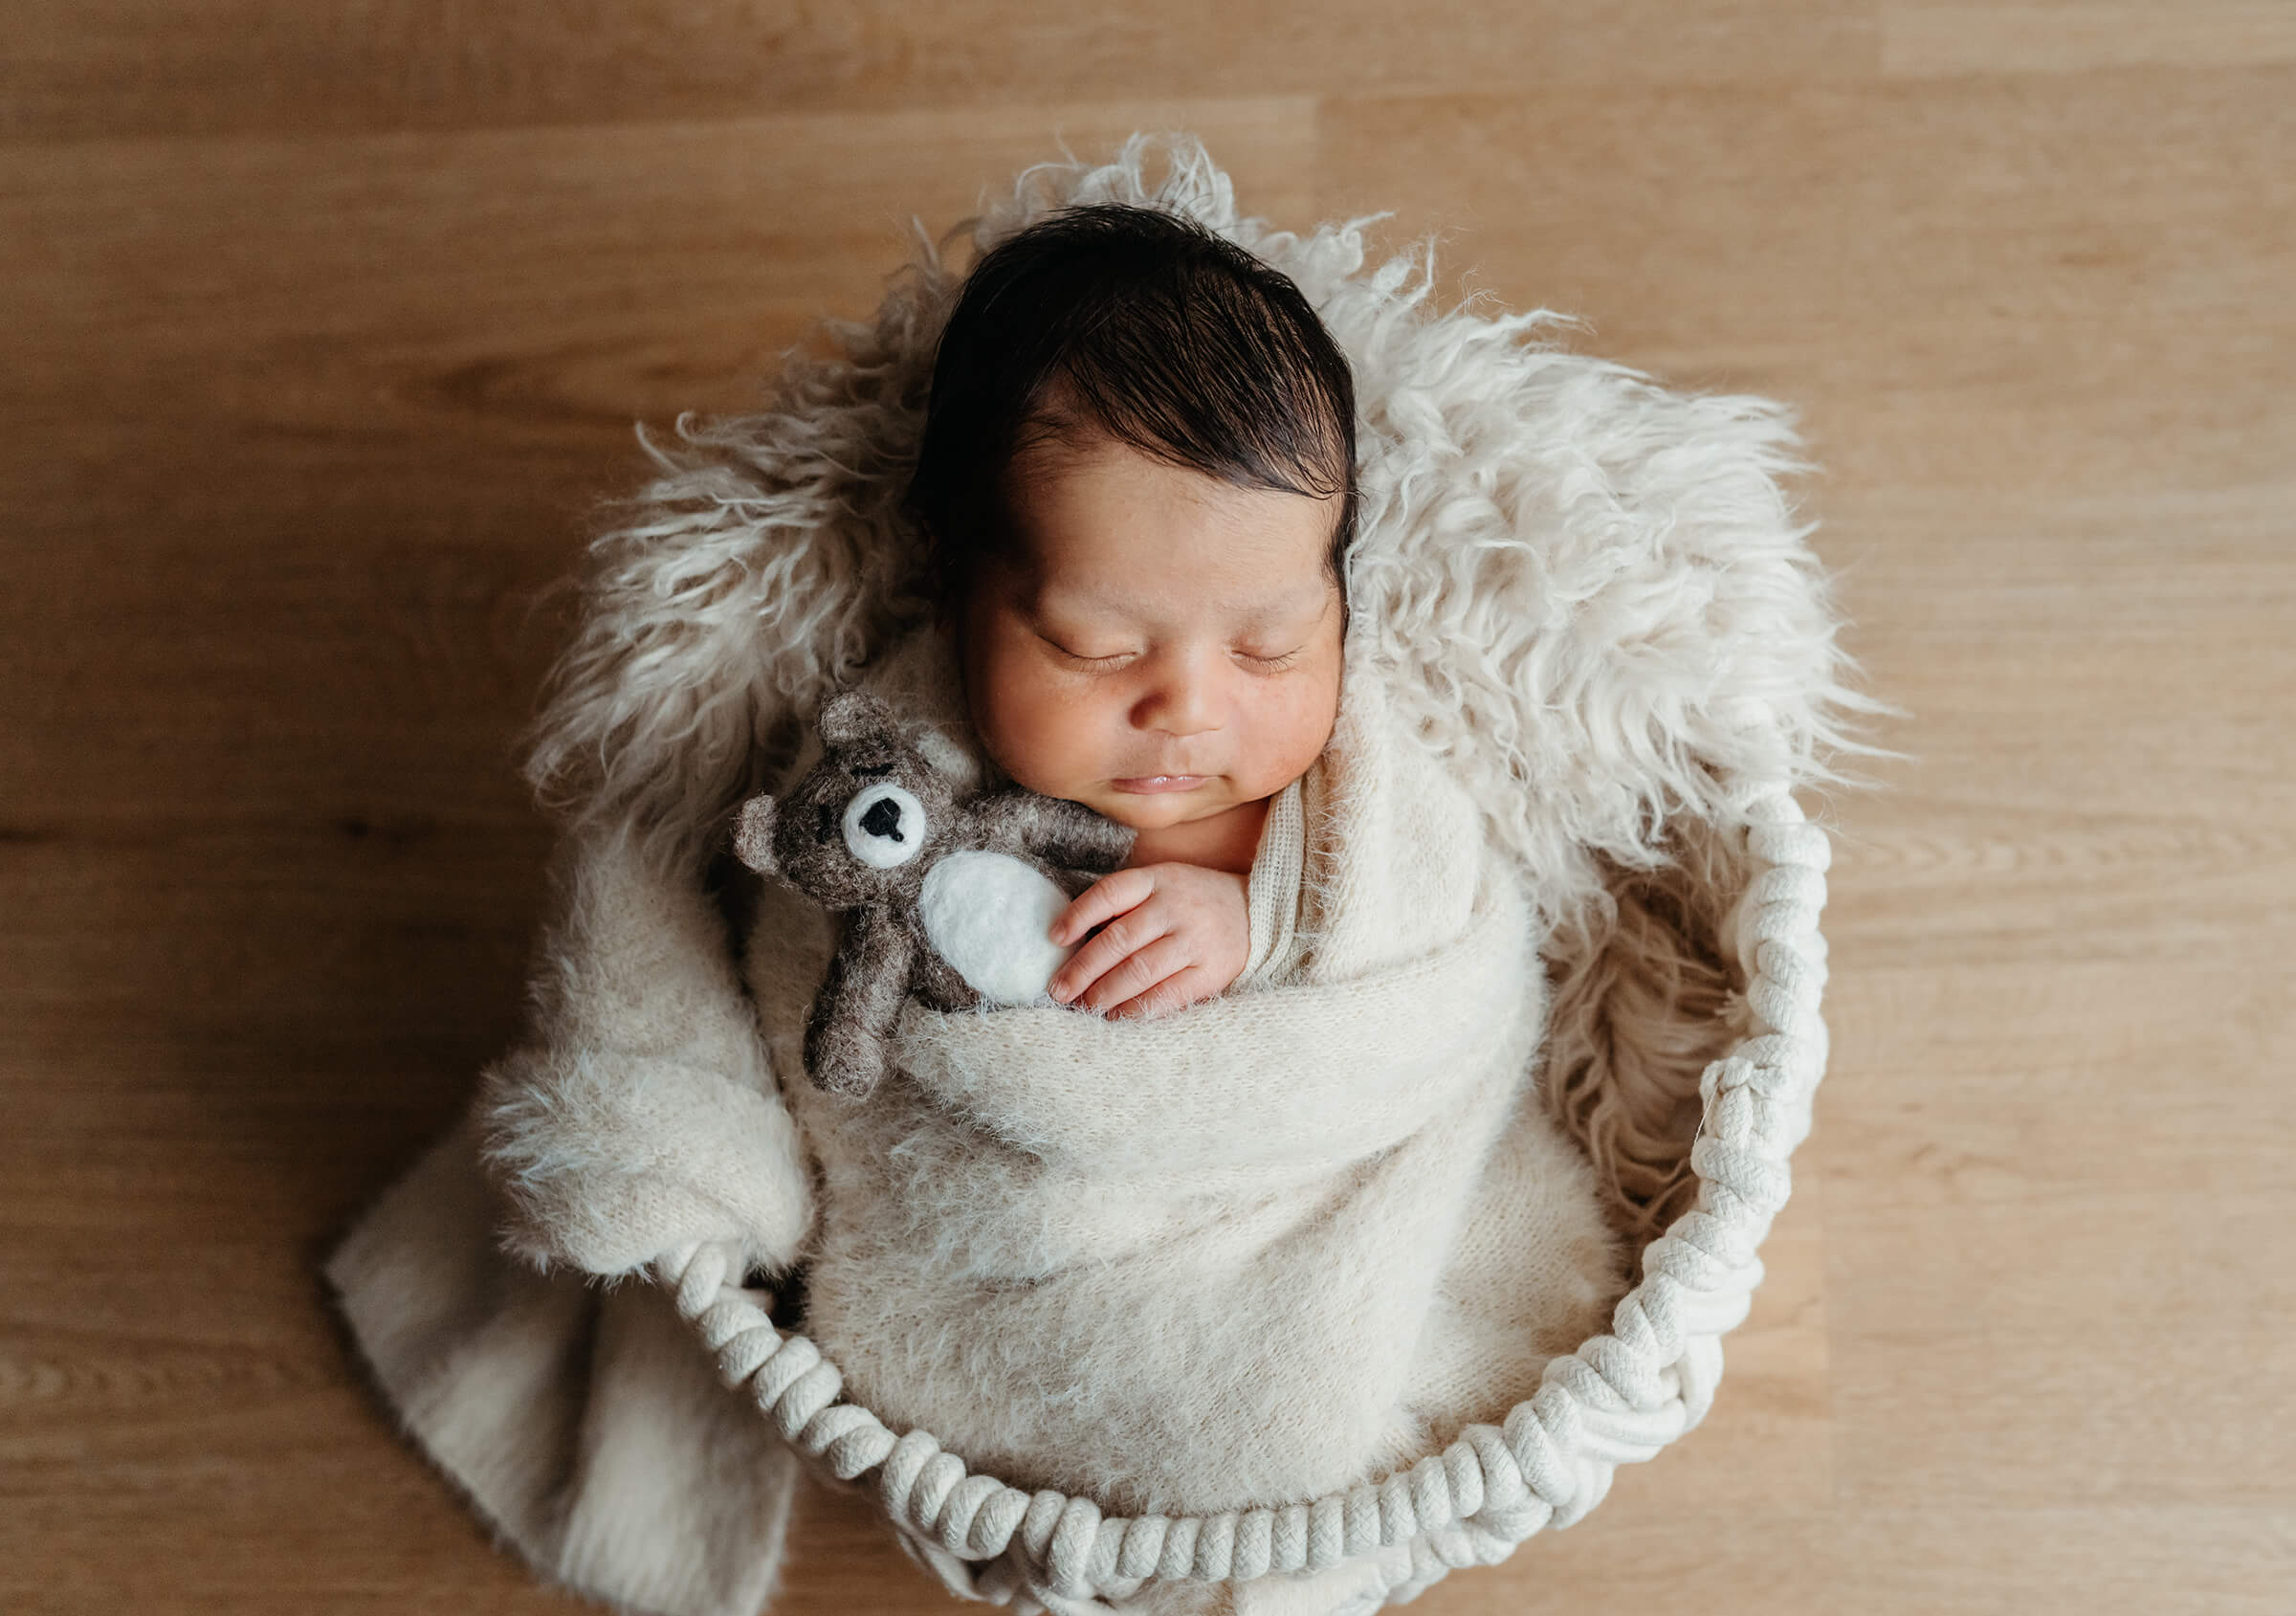 newborn in cream wrap holding small teddy bear